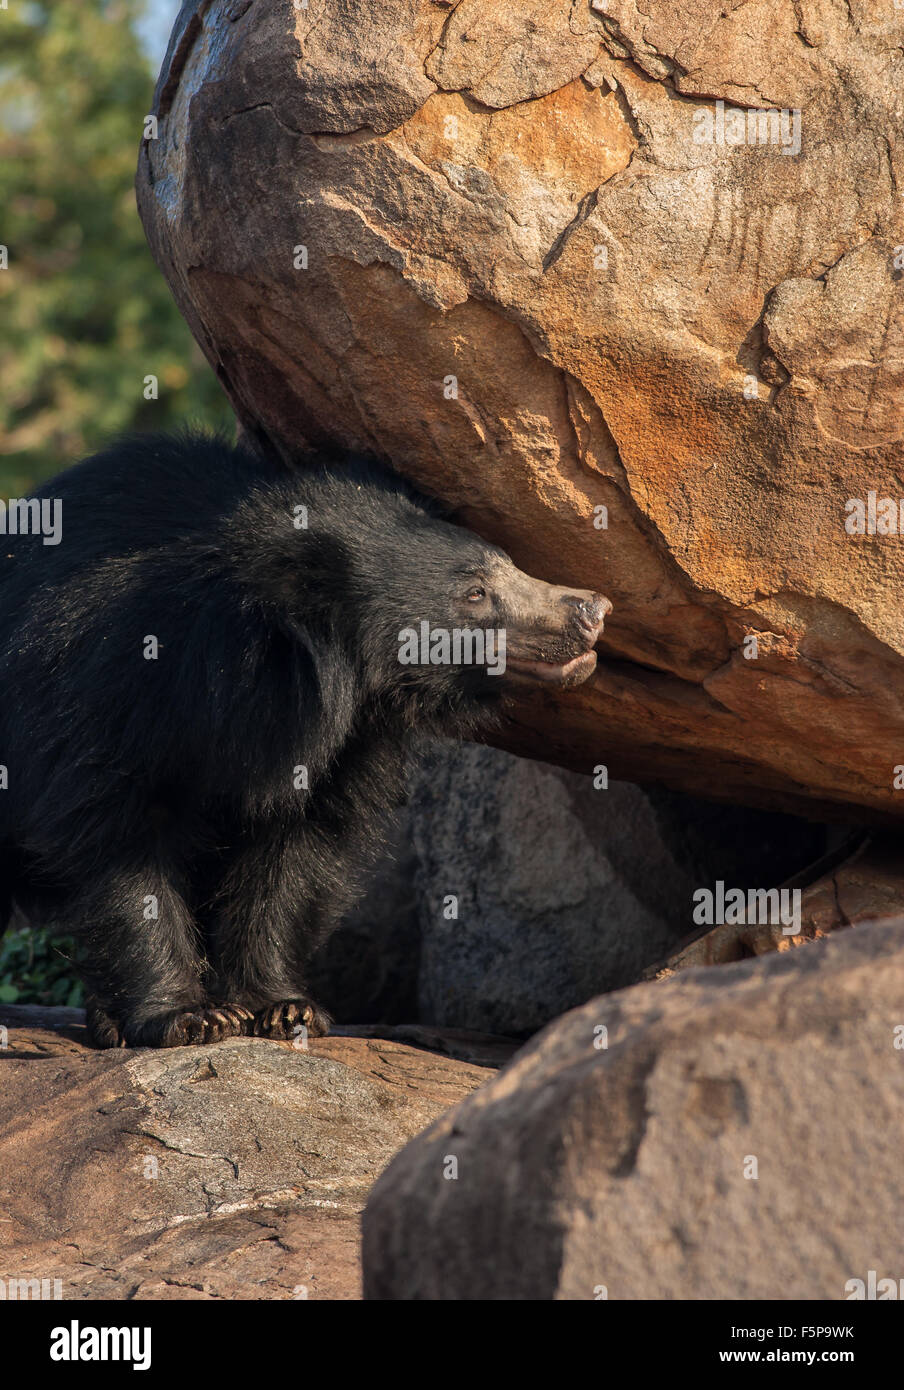 Indian Sloth bear on rocks at Daroji bear sanctuary, Karnataka, india. Image with copy space Stock Photo